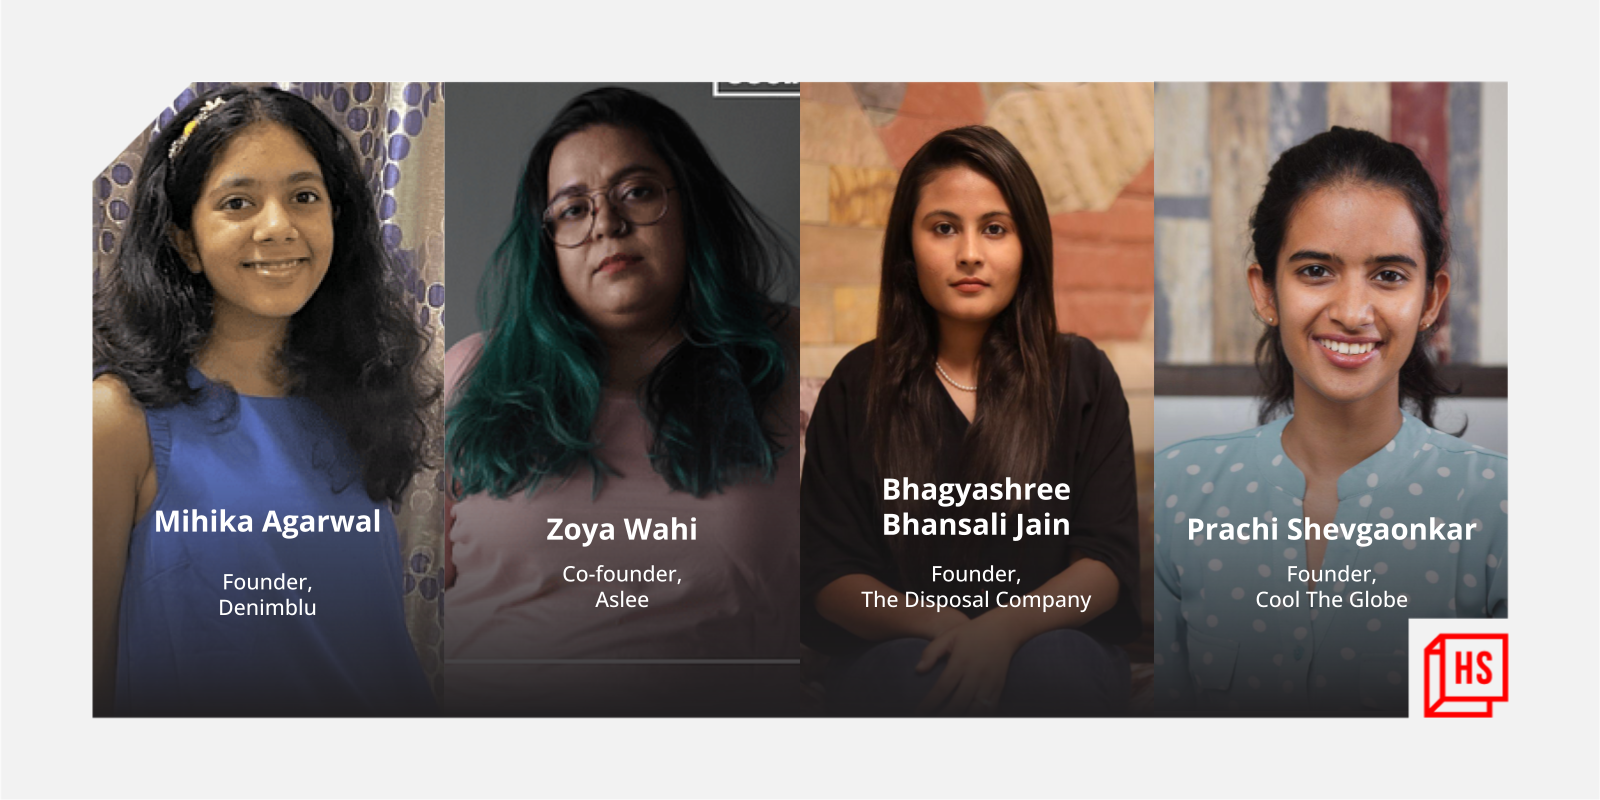 Meet four women entrepreneurs innovating to create an eco-friendly world